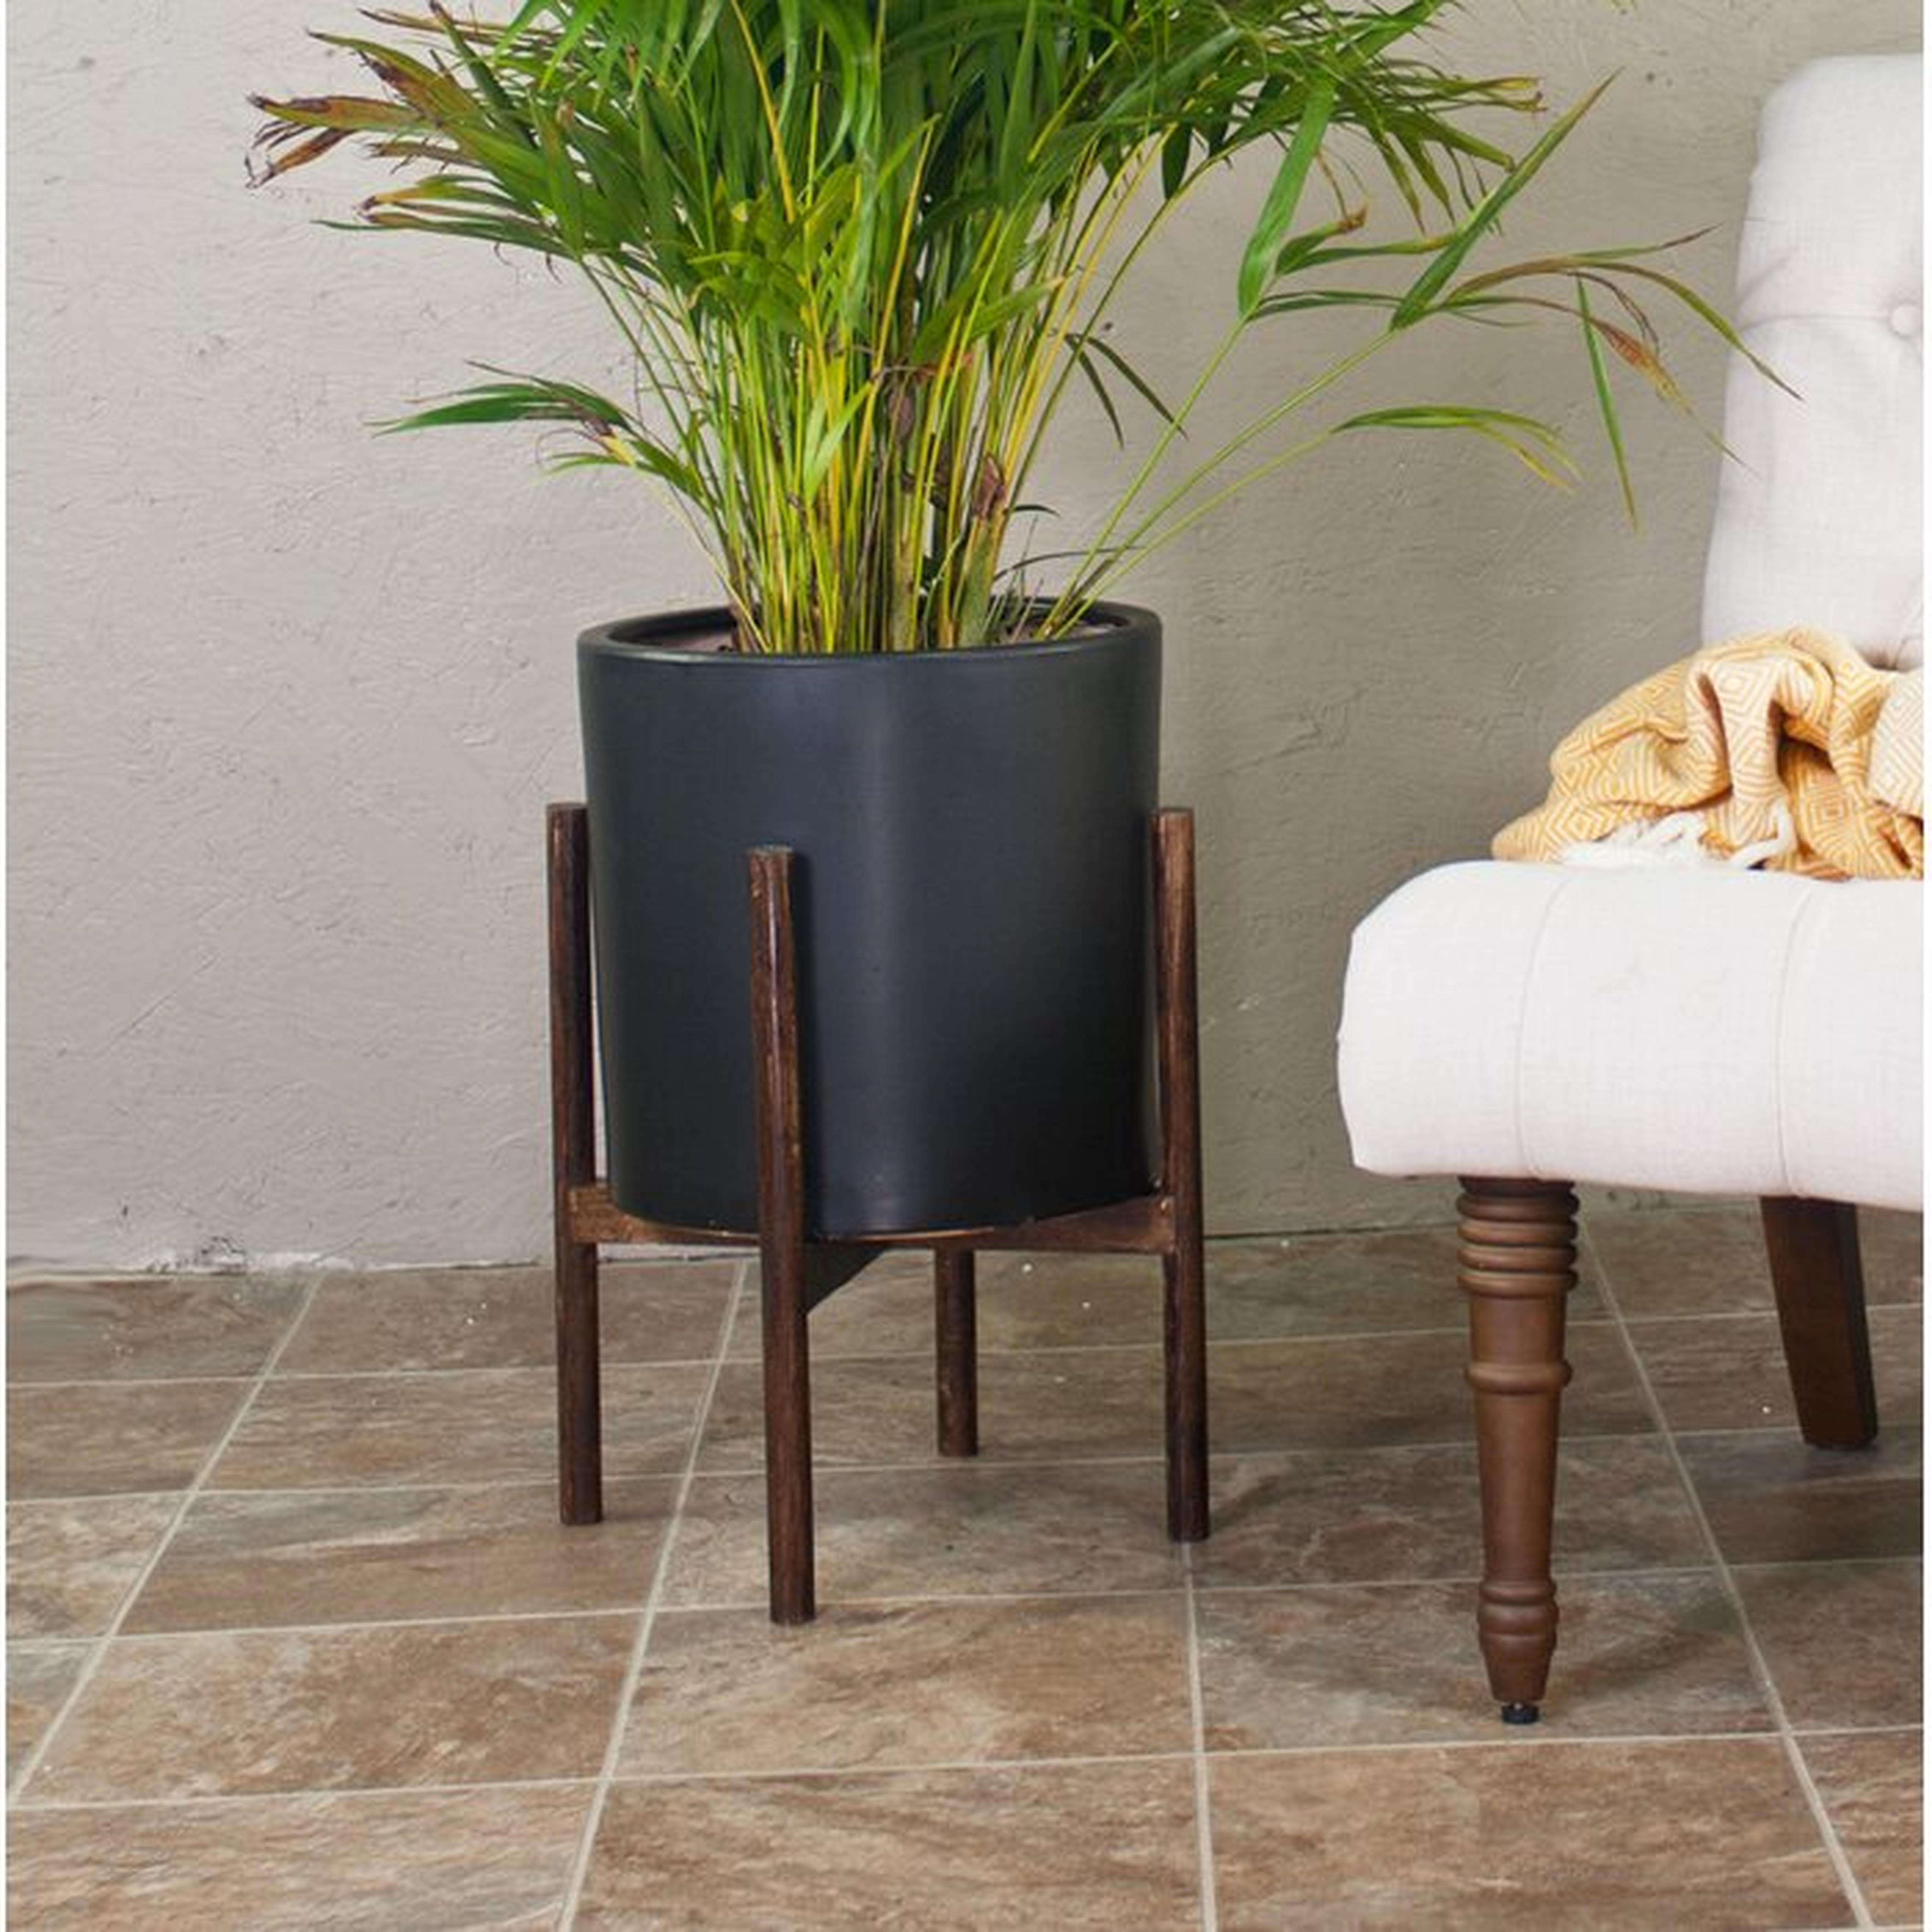 Brantner Ceramic Pot Planter with Plant Stand - Wayfair